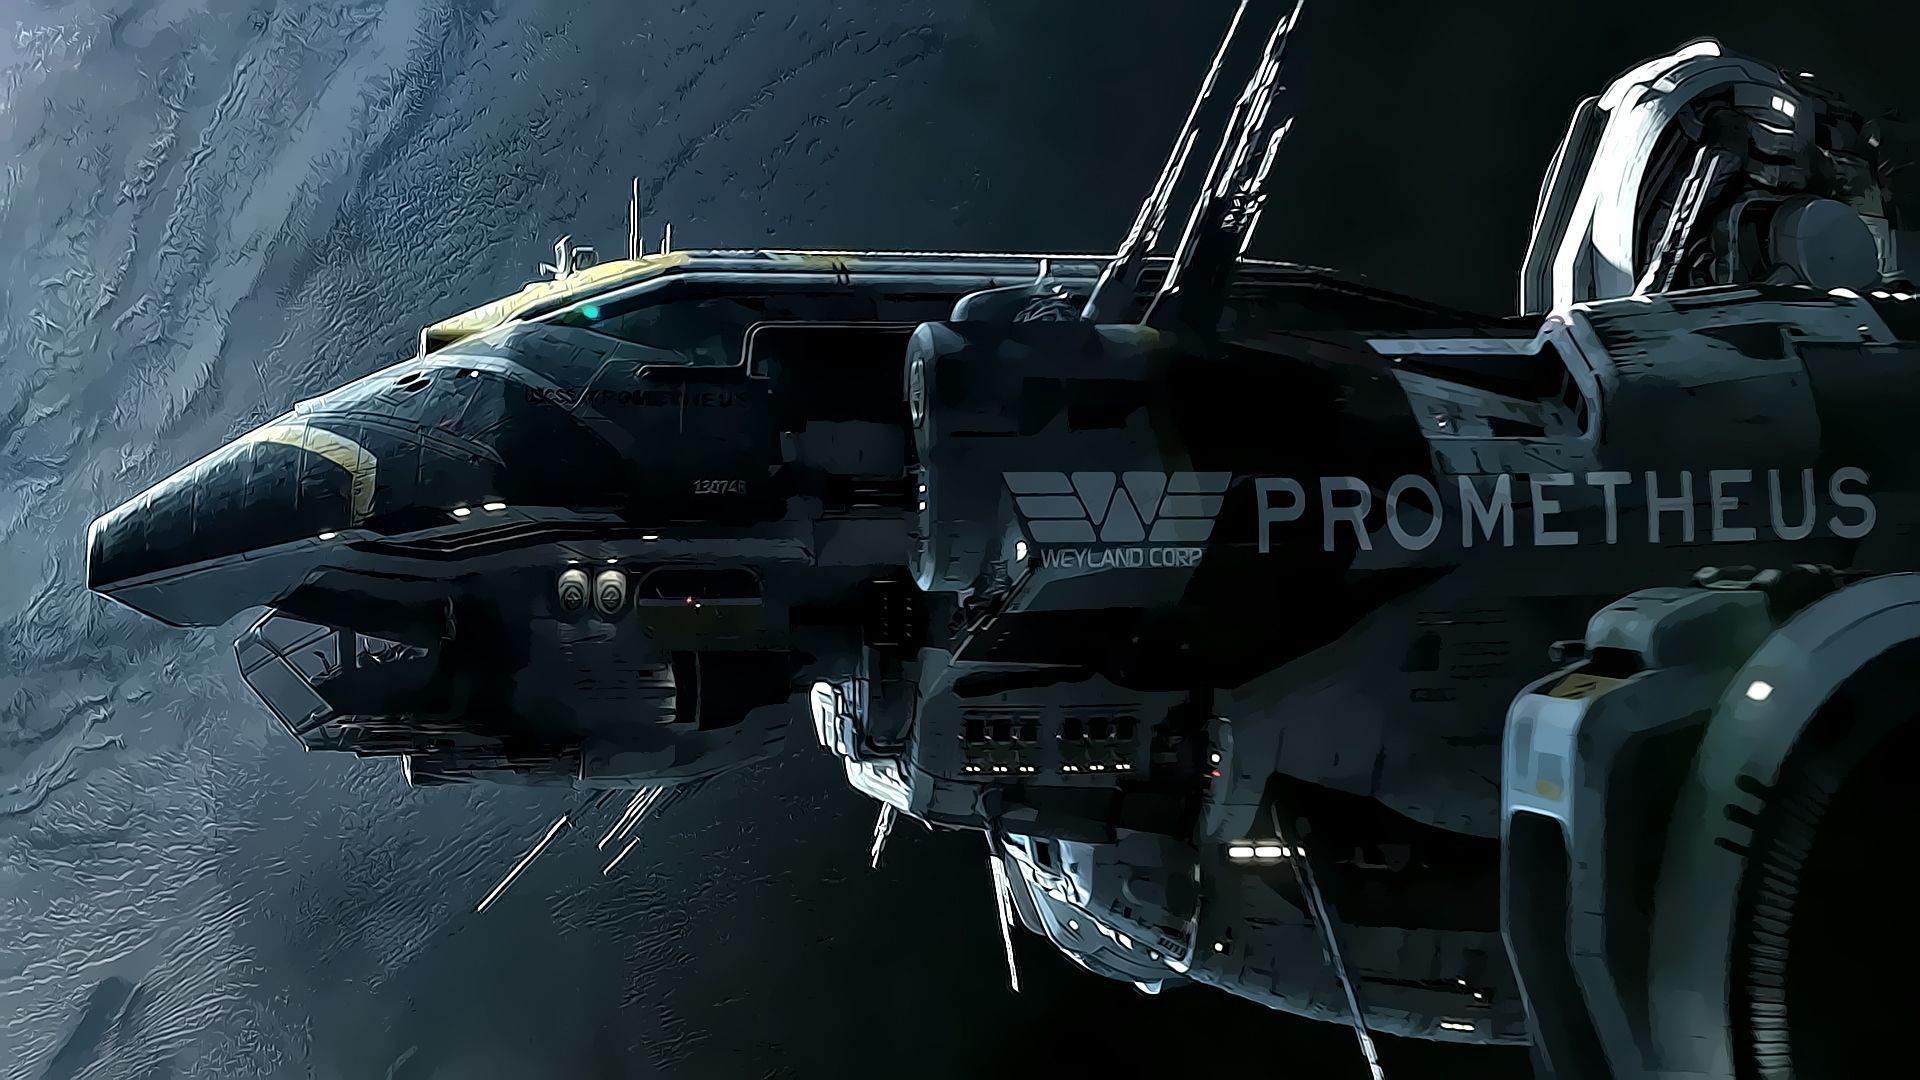 Prometheus (2012 film) Wallpaper: Prometheus Wallpaper. Prometheus movie, Movie wallpaper, Sci fi spaceships